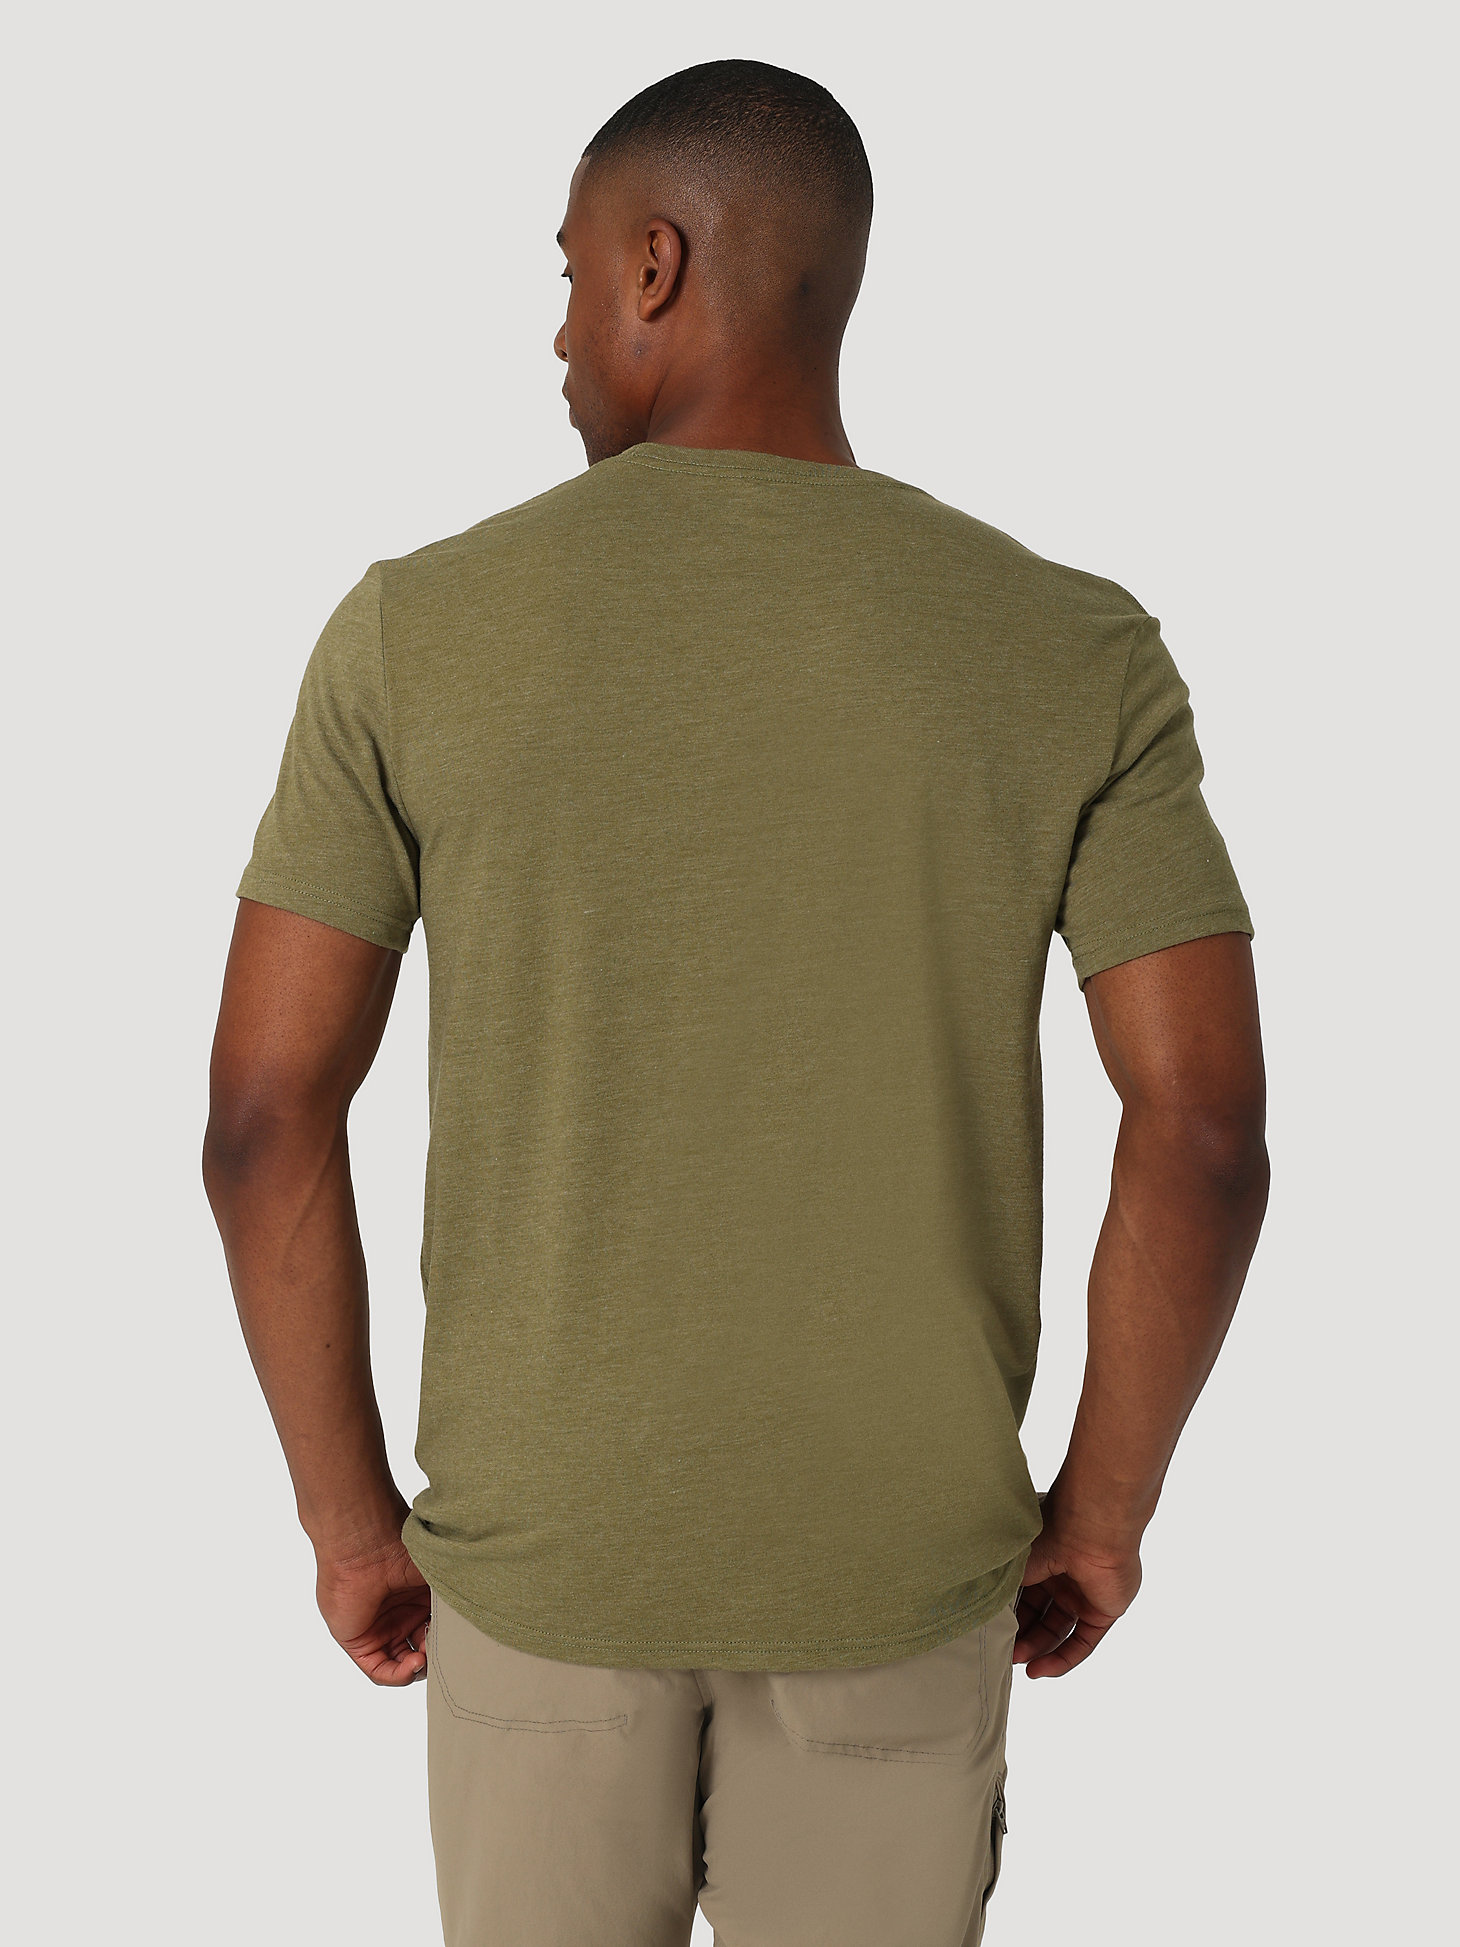 ATG By Wrangler™ Men's Logo T-Shirt in Capulet Olive alternative view 2